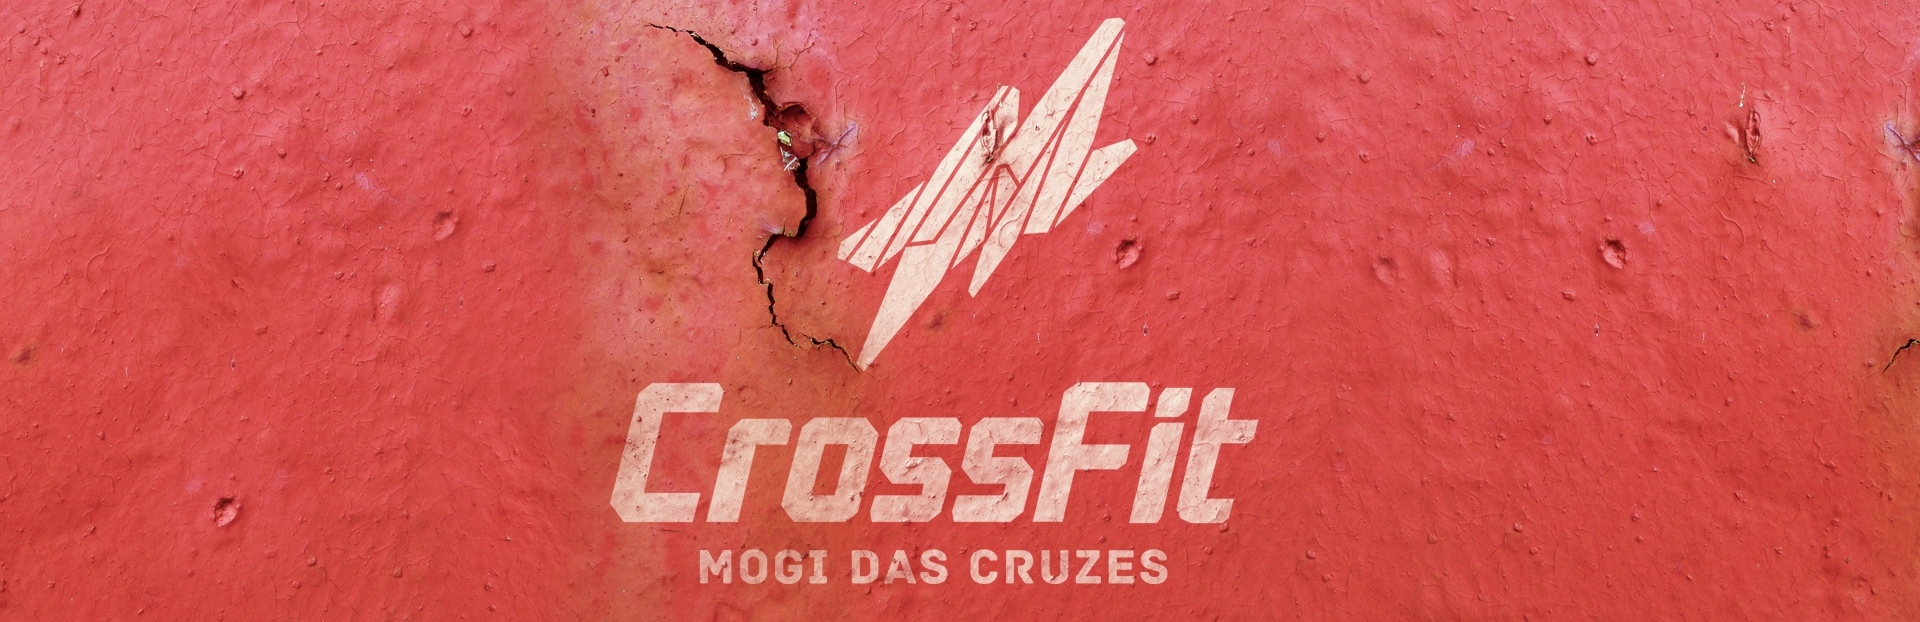 Crossfit Mogi das Cruzes